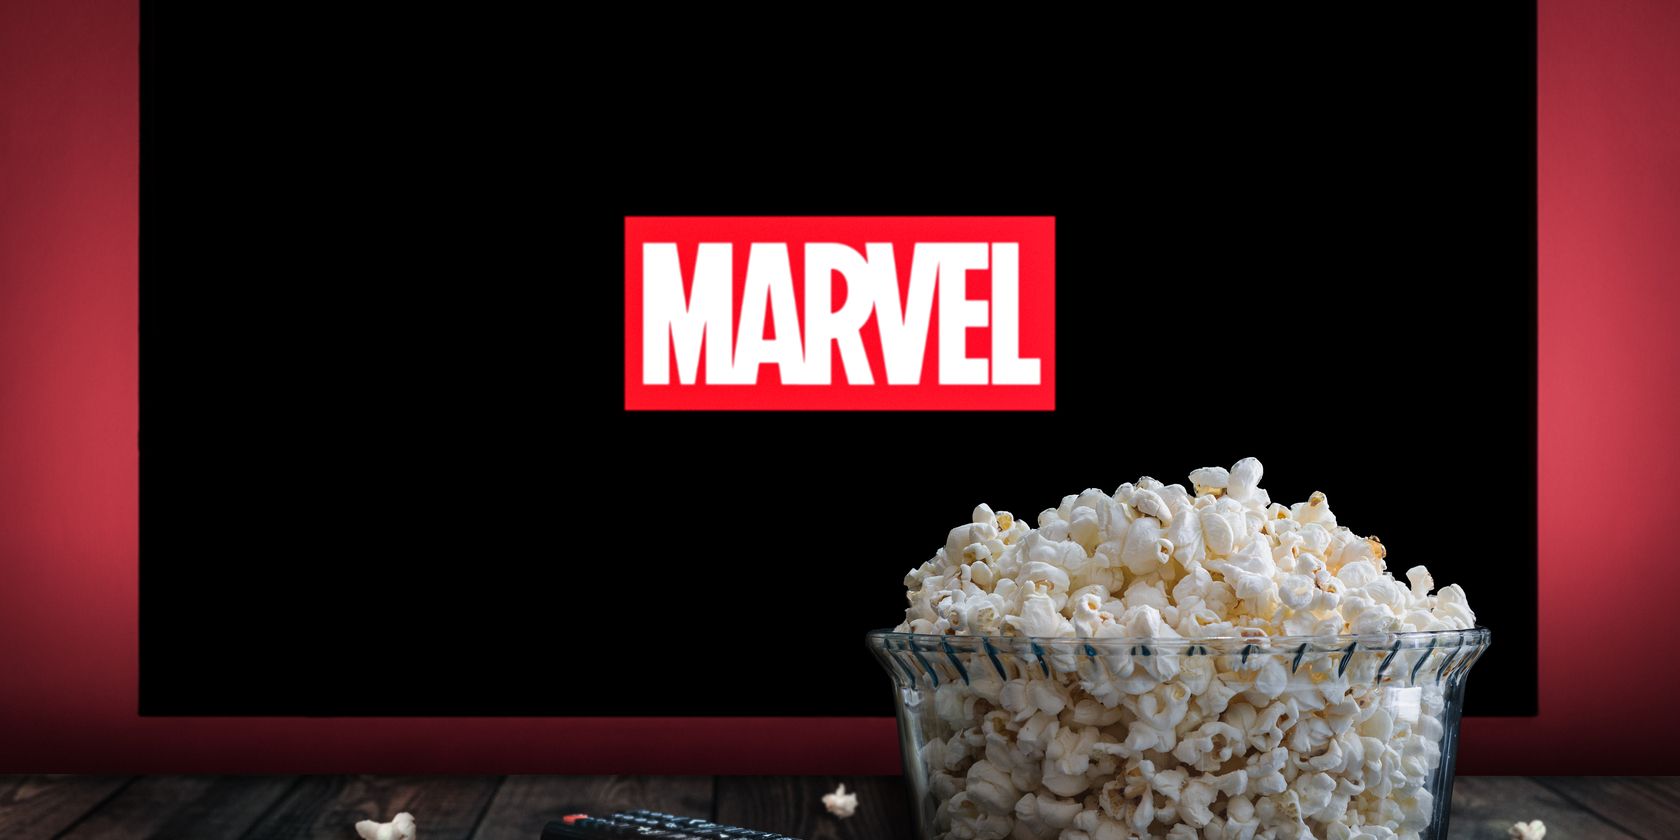 Marvel-logo-on-tv-with-popcorn.jpg